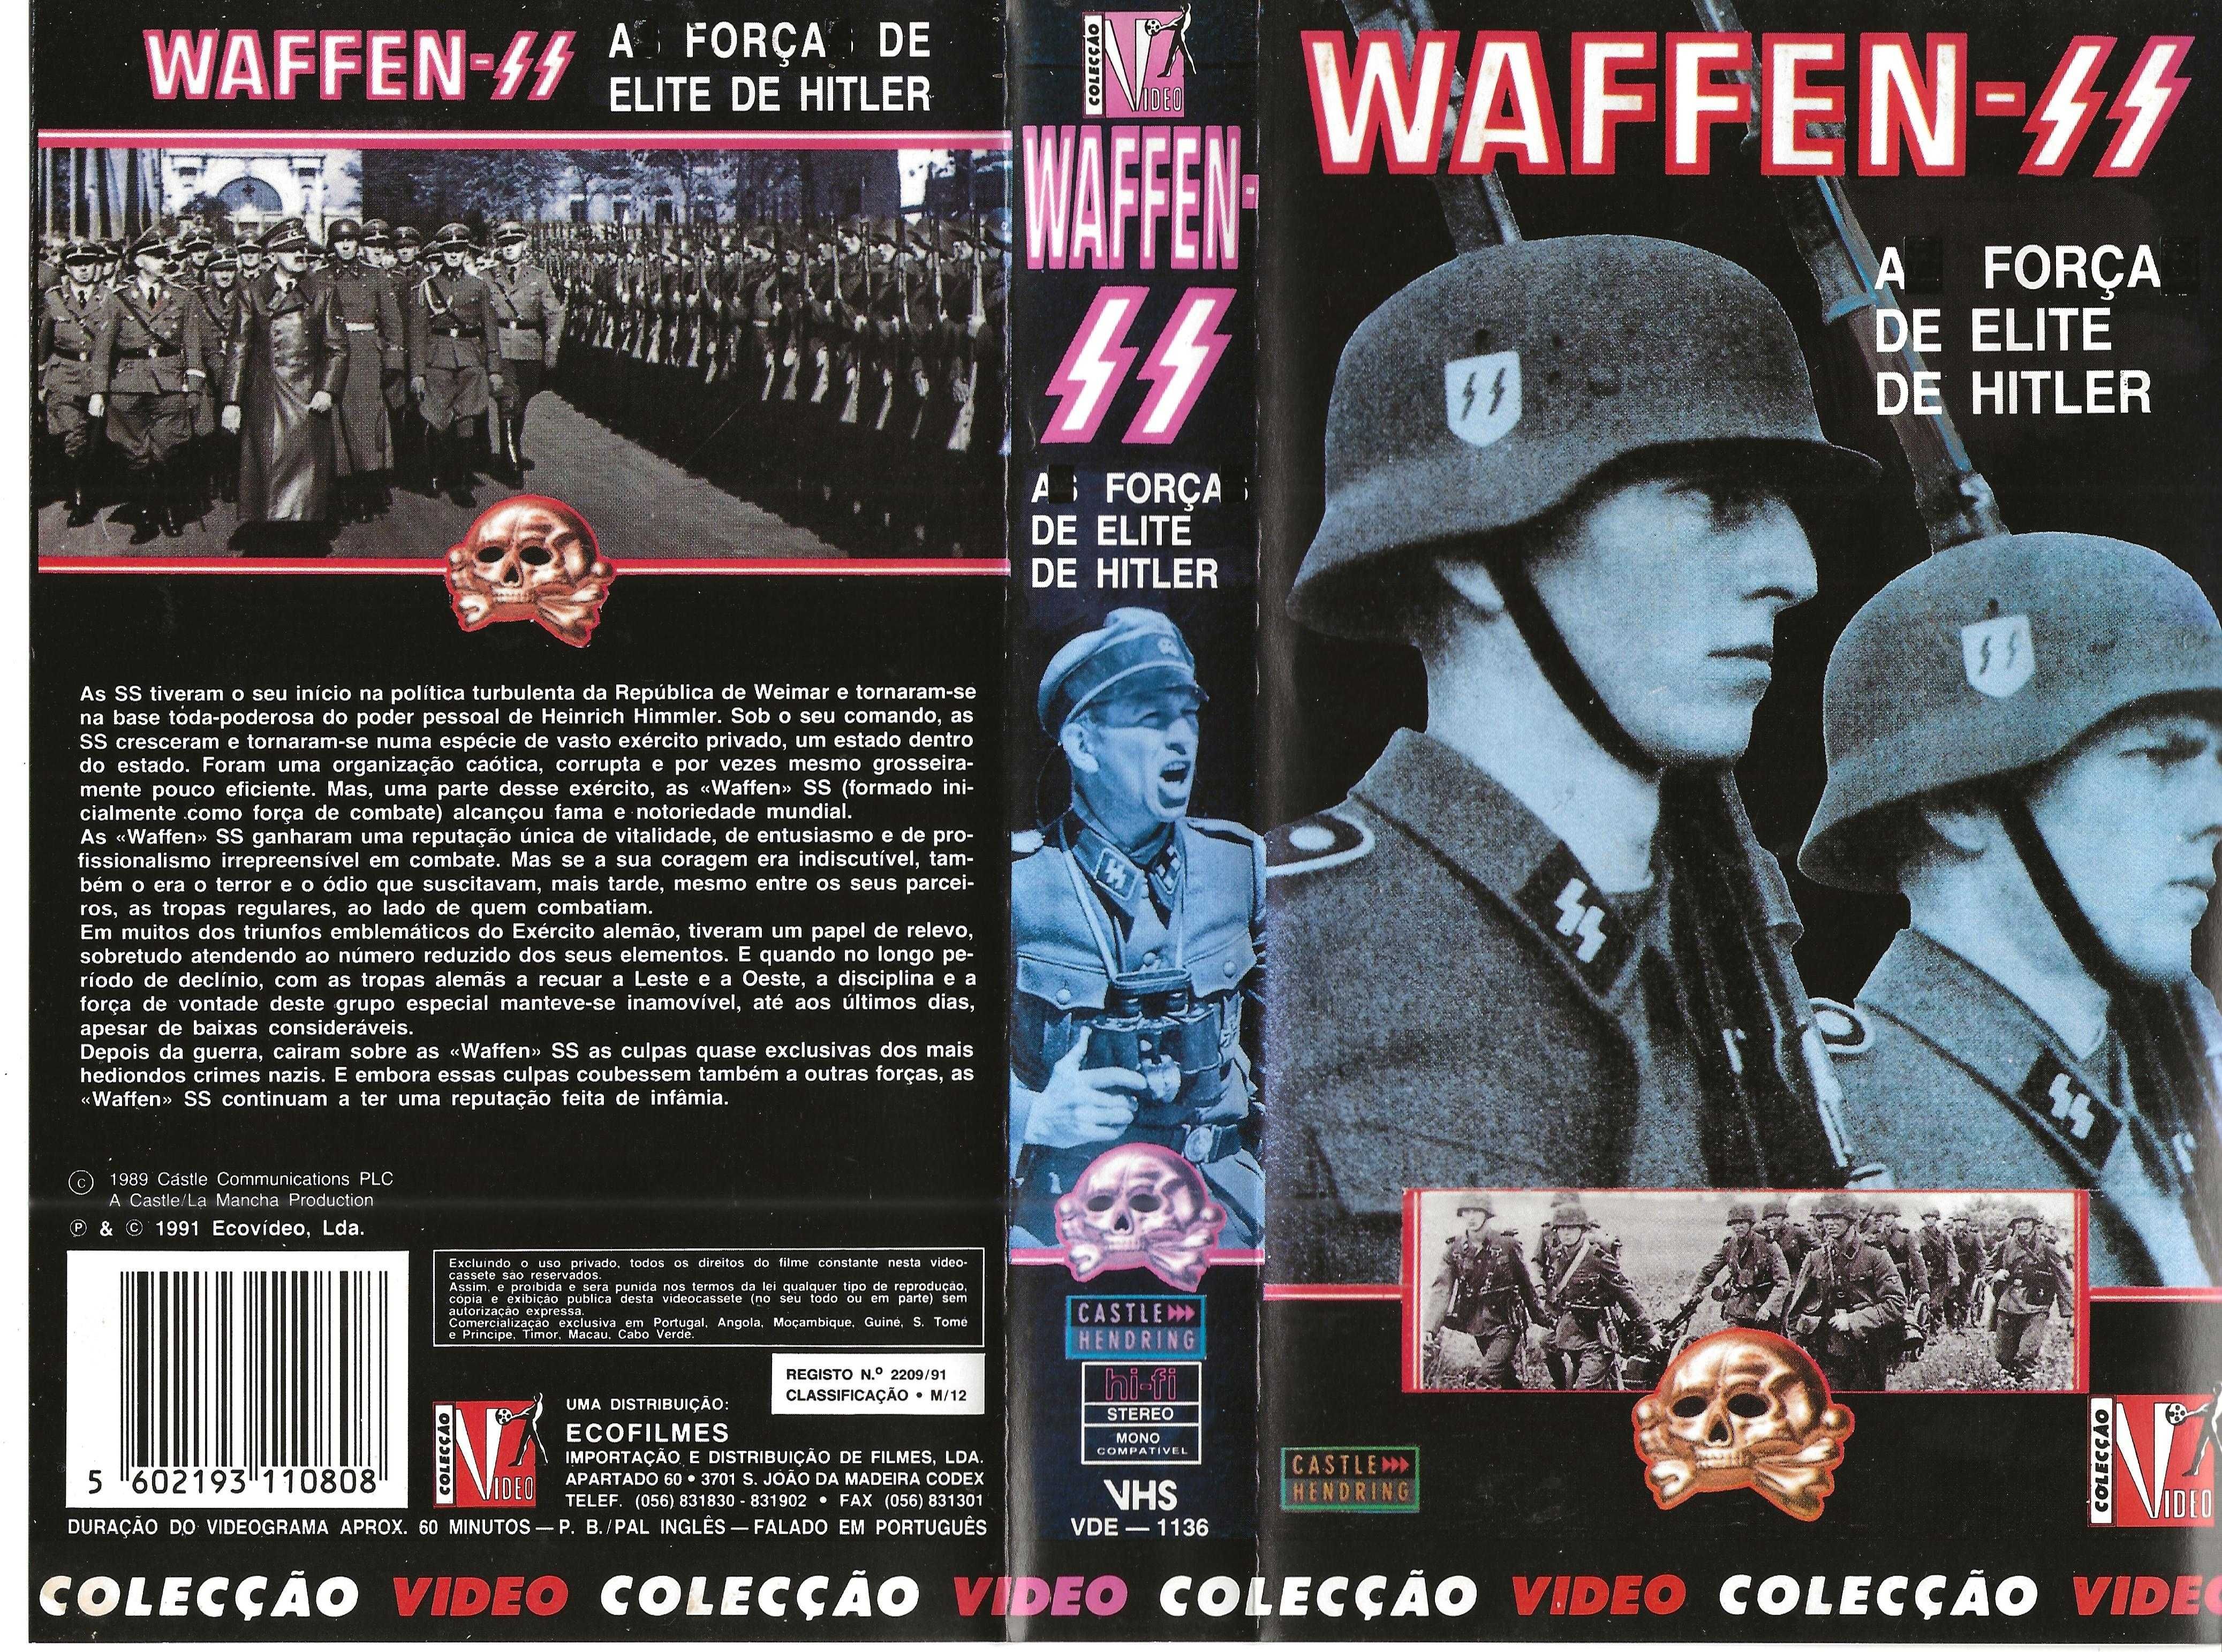 Cassetes VHS de temas militares